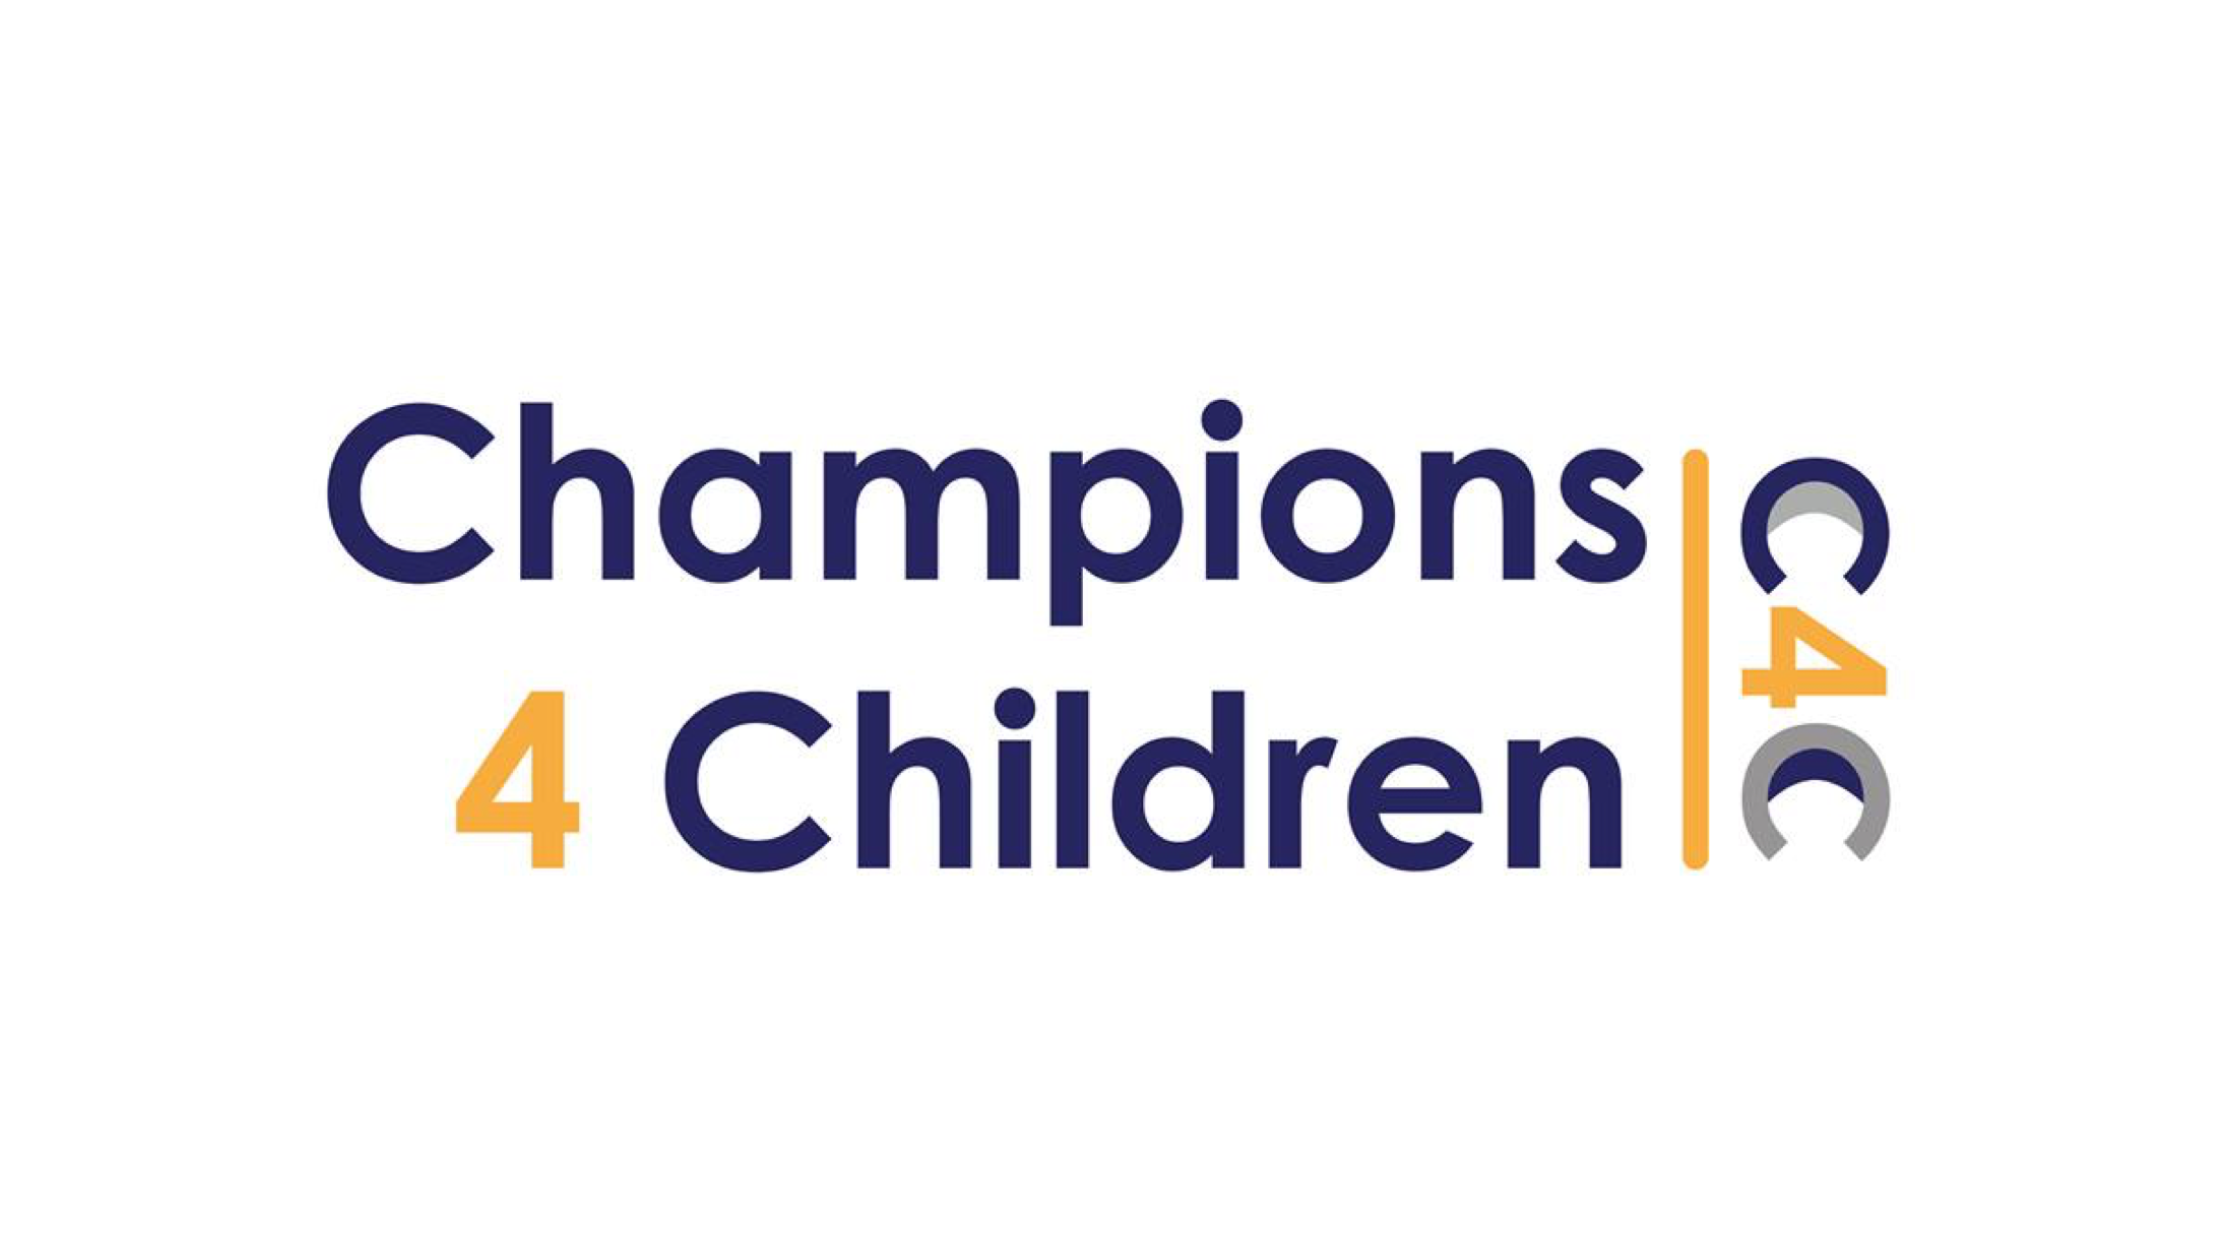 SWFL charities benefit from Champions 4 Children fundraiser